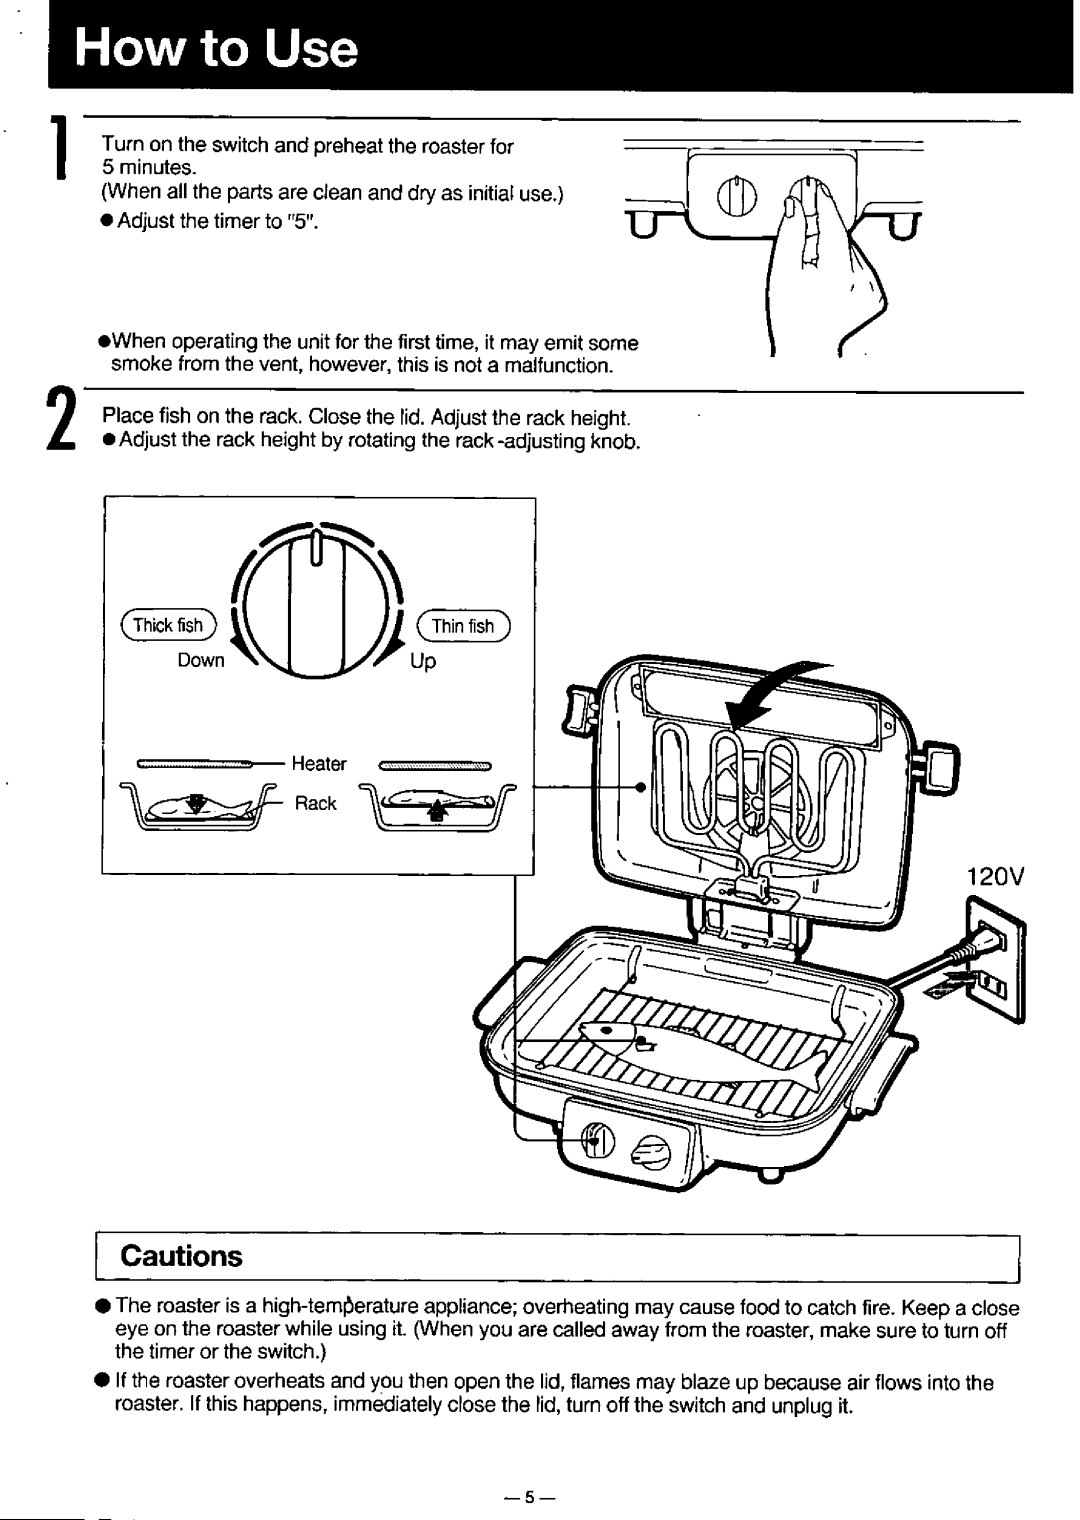 Panasonic NF-RT300N manual 